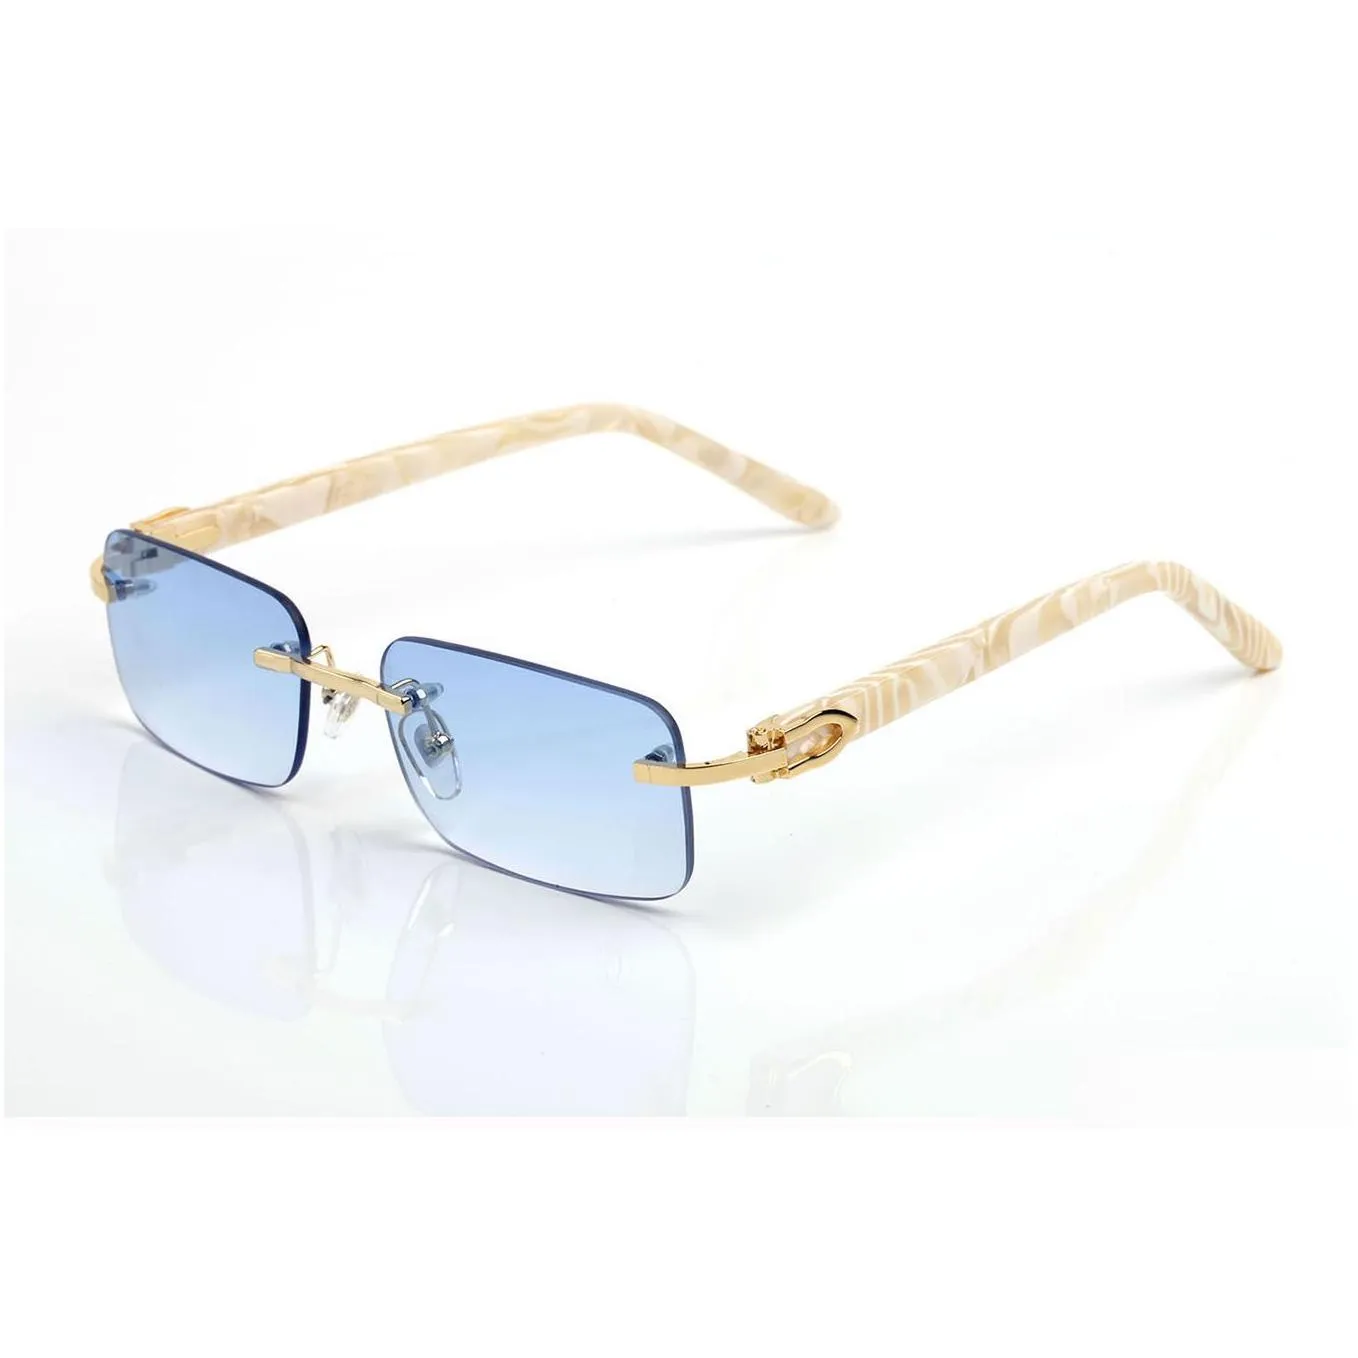 mens designer glasses sunglasses rimless square blue lens peach heart gold hardware polishing craft fashion rectangle c decorate arm buff wooden